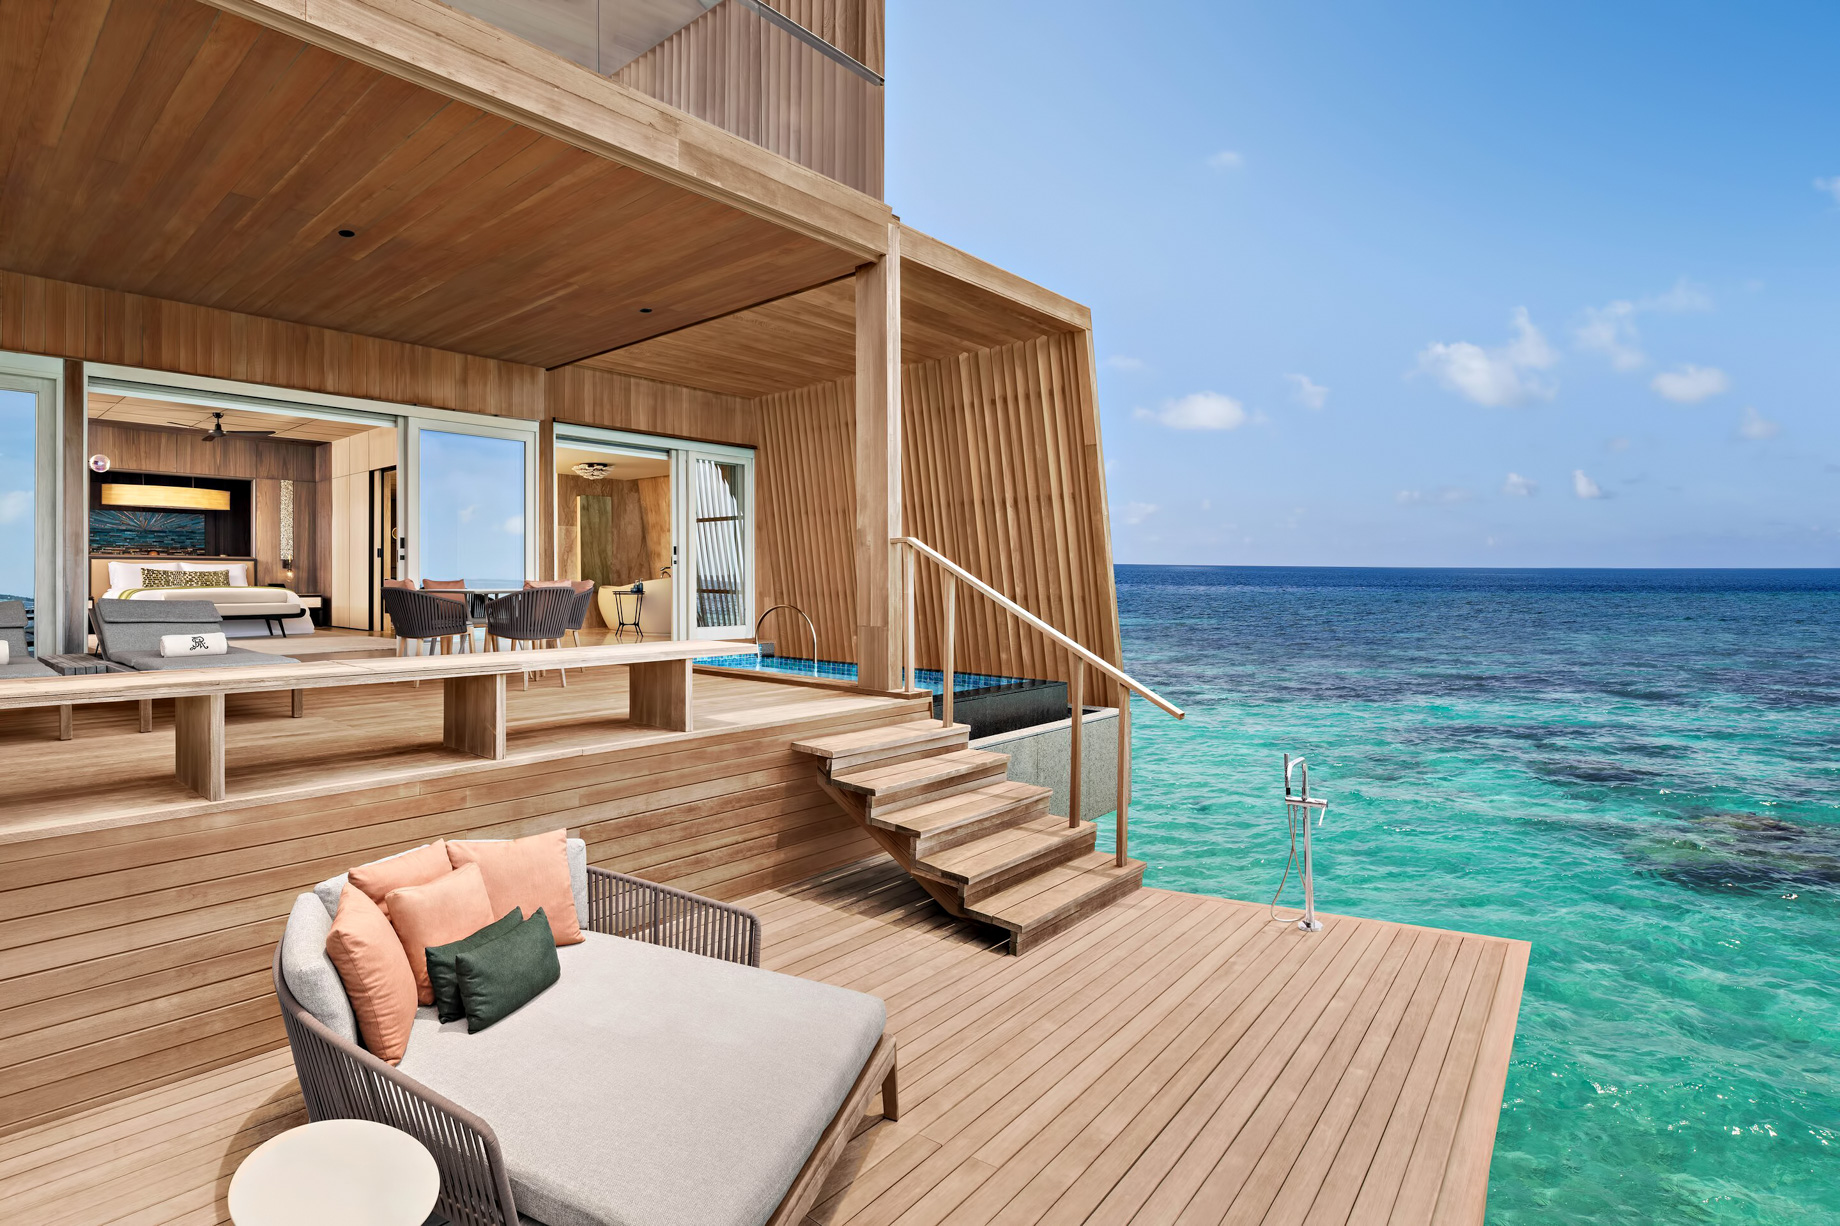 The St. Regis Maldives Vommuli Resort – Dhaalu Atoll, Maldives – Two Bedroom Sunset Overwater Villa